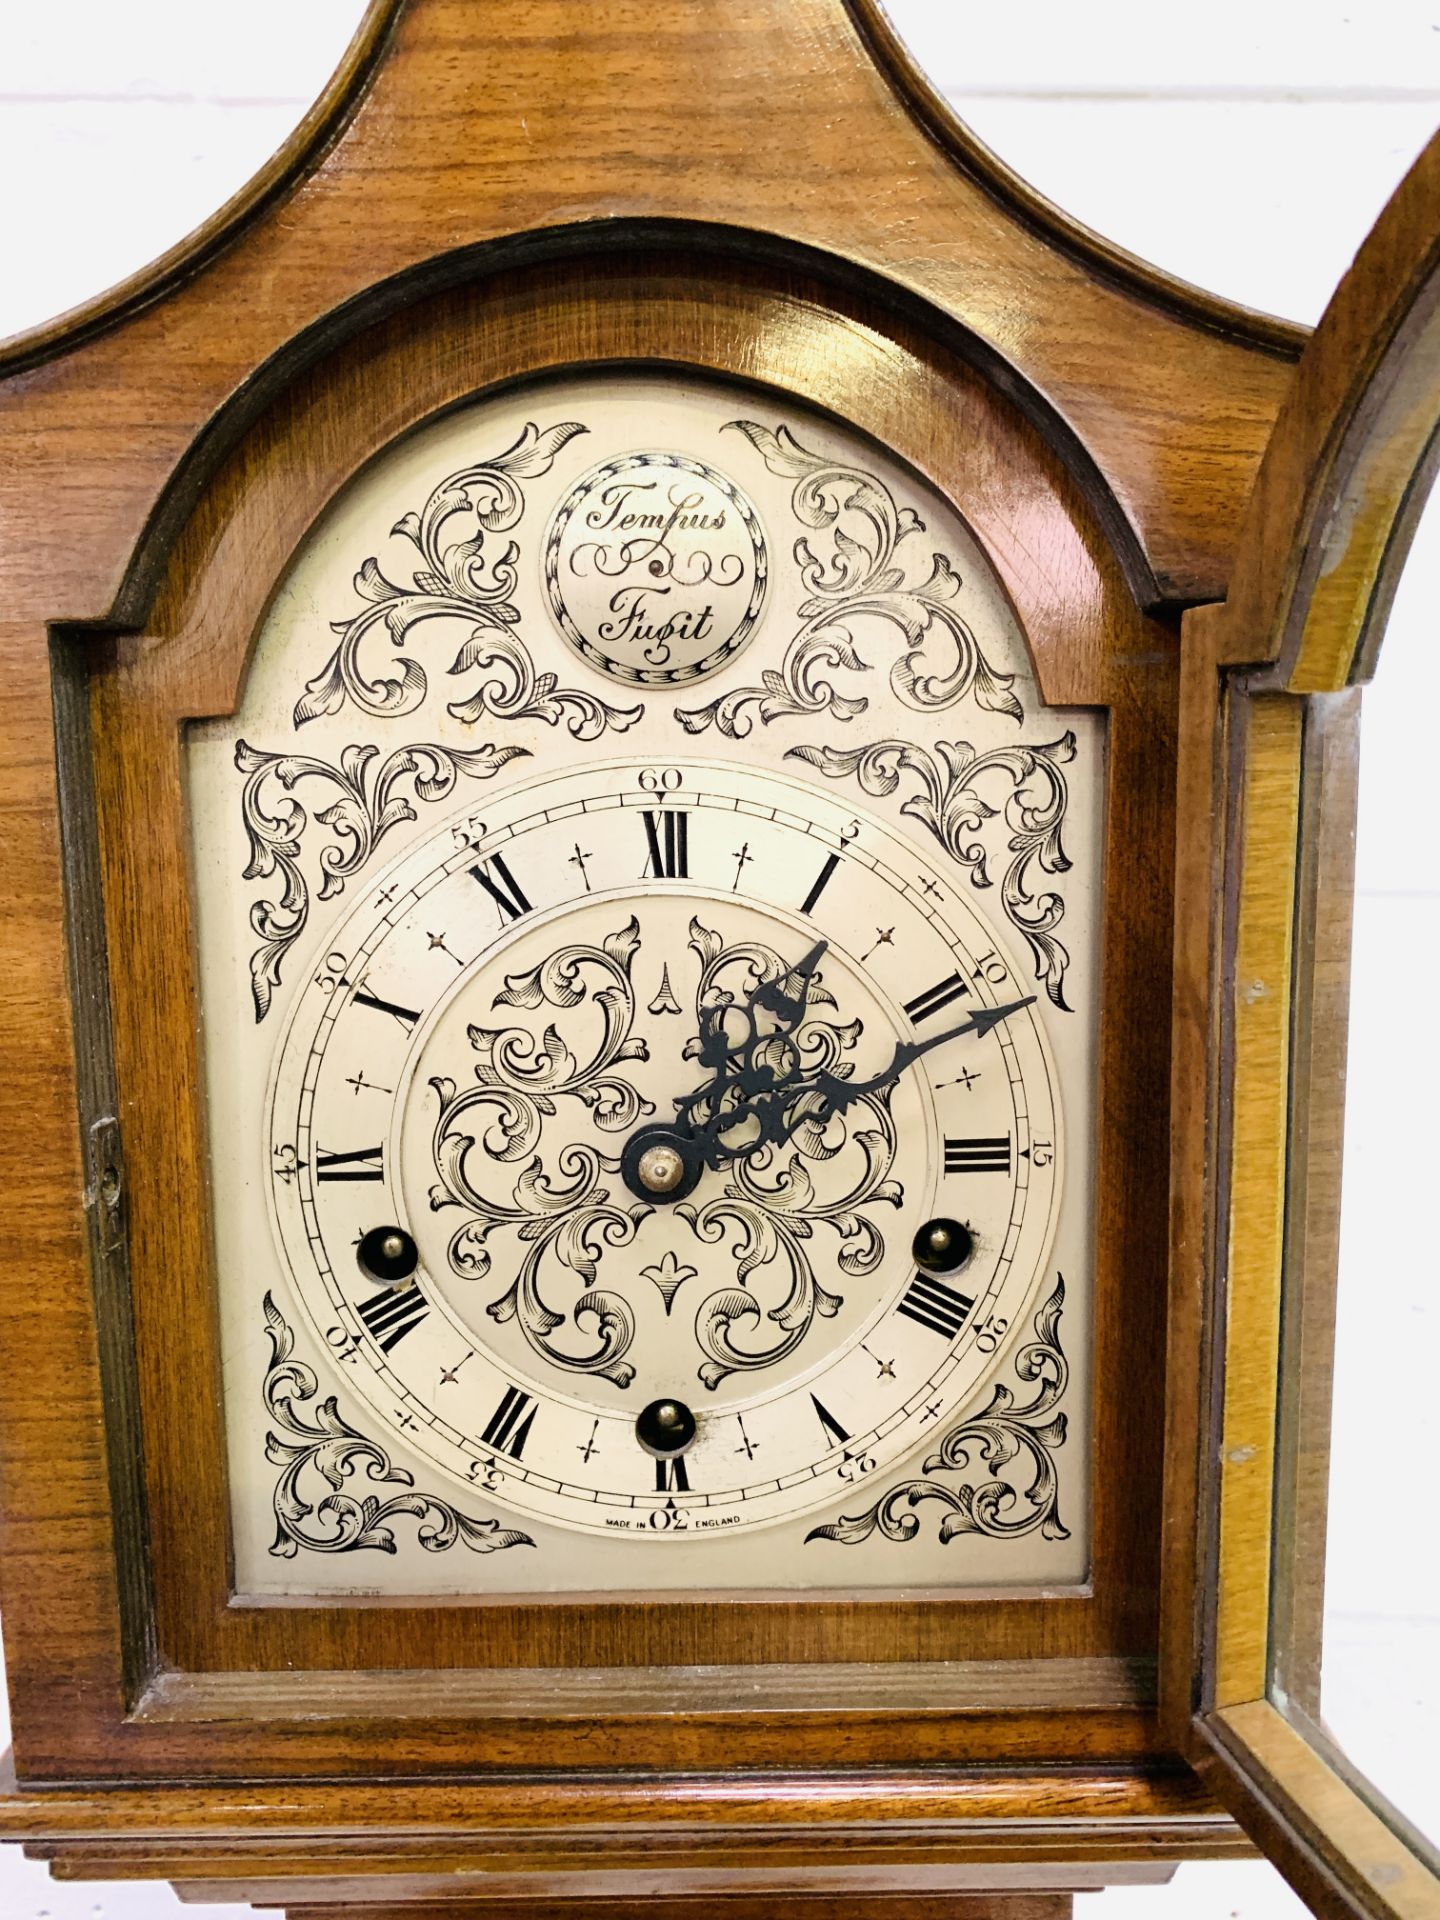 Mahogany veneer cased Grandmother clock - Image 3 of 5